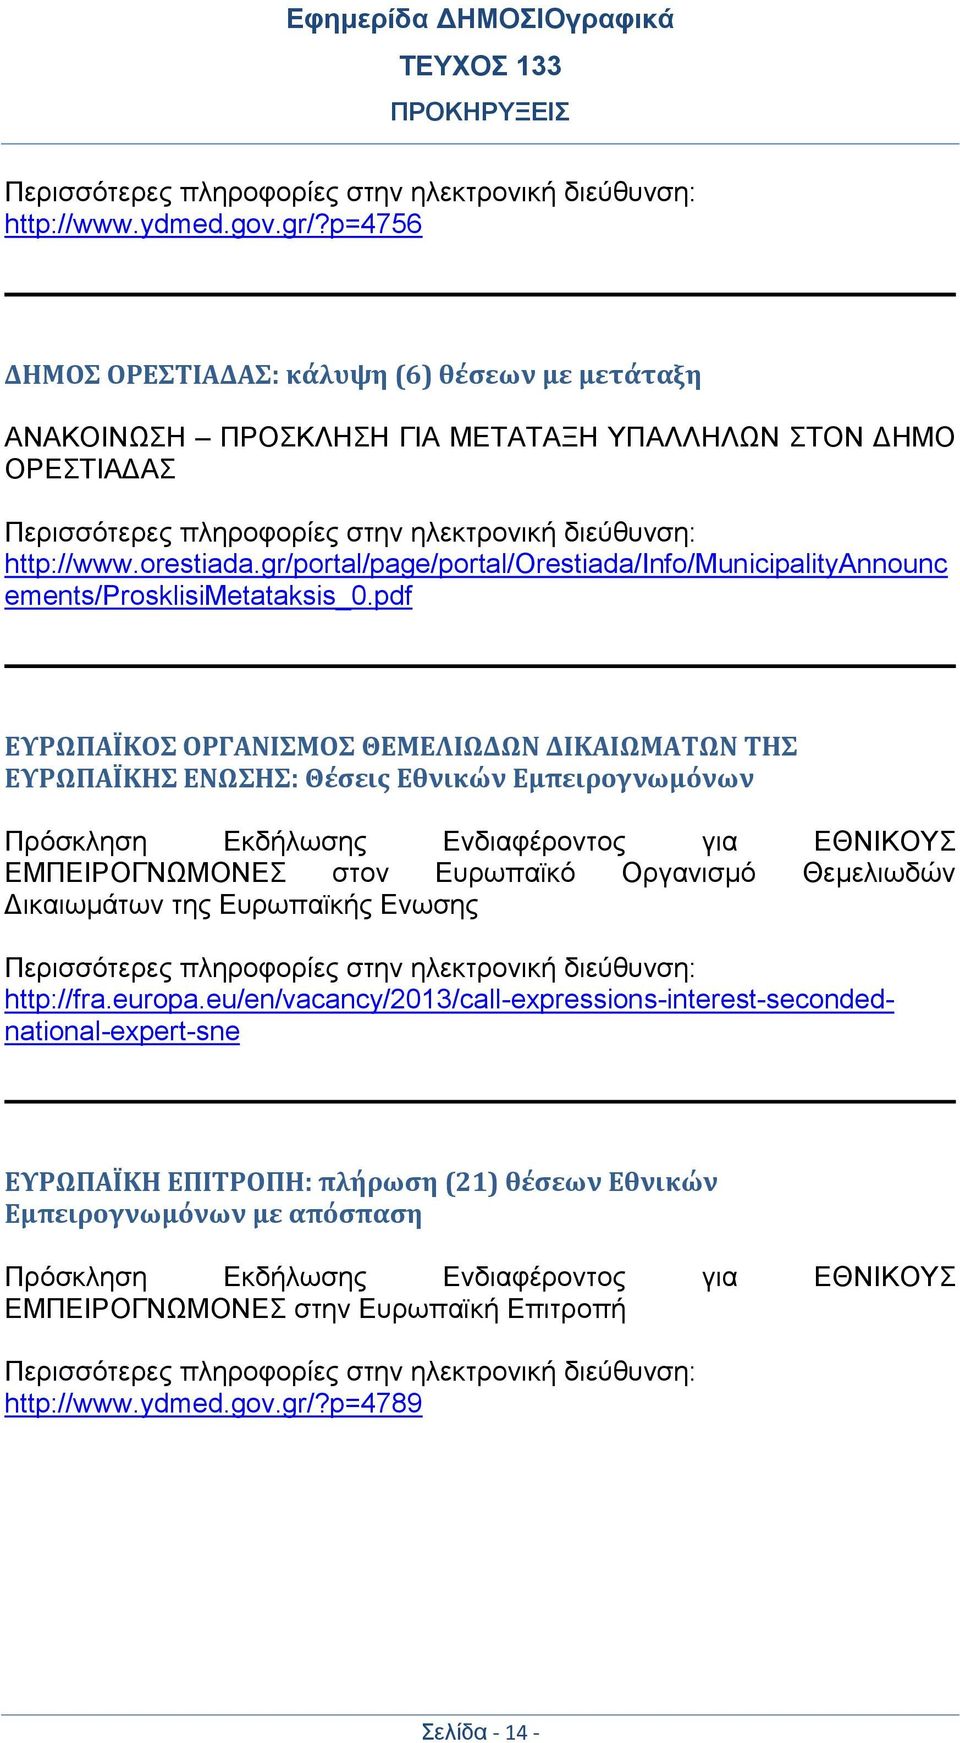 gr/portal/page/portal/orestiada/info/municipalityannounc ements/prosklisimetataksis_0.